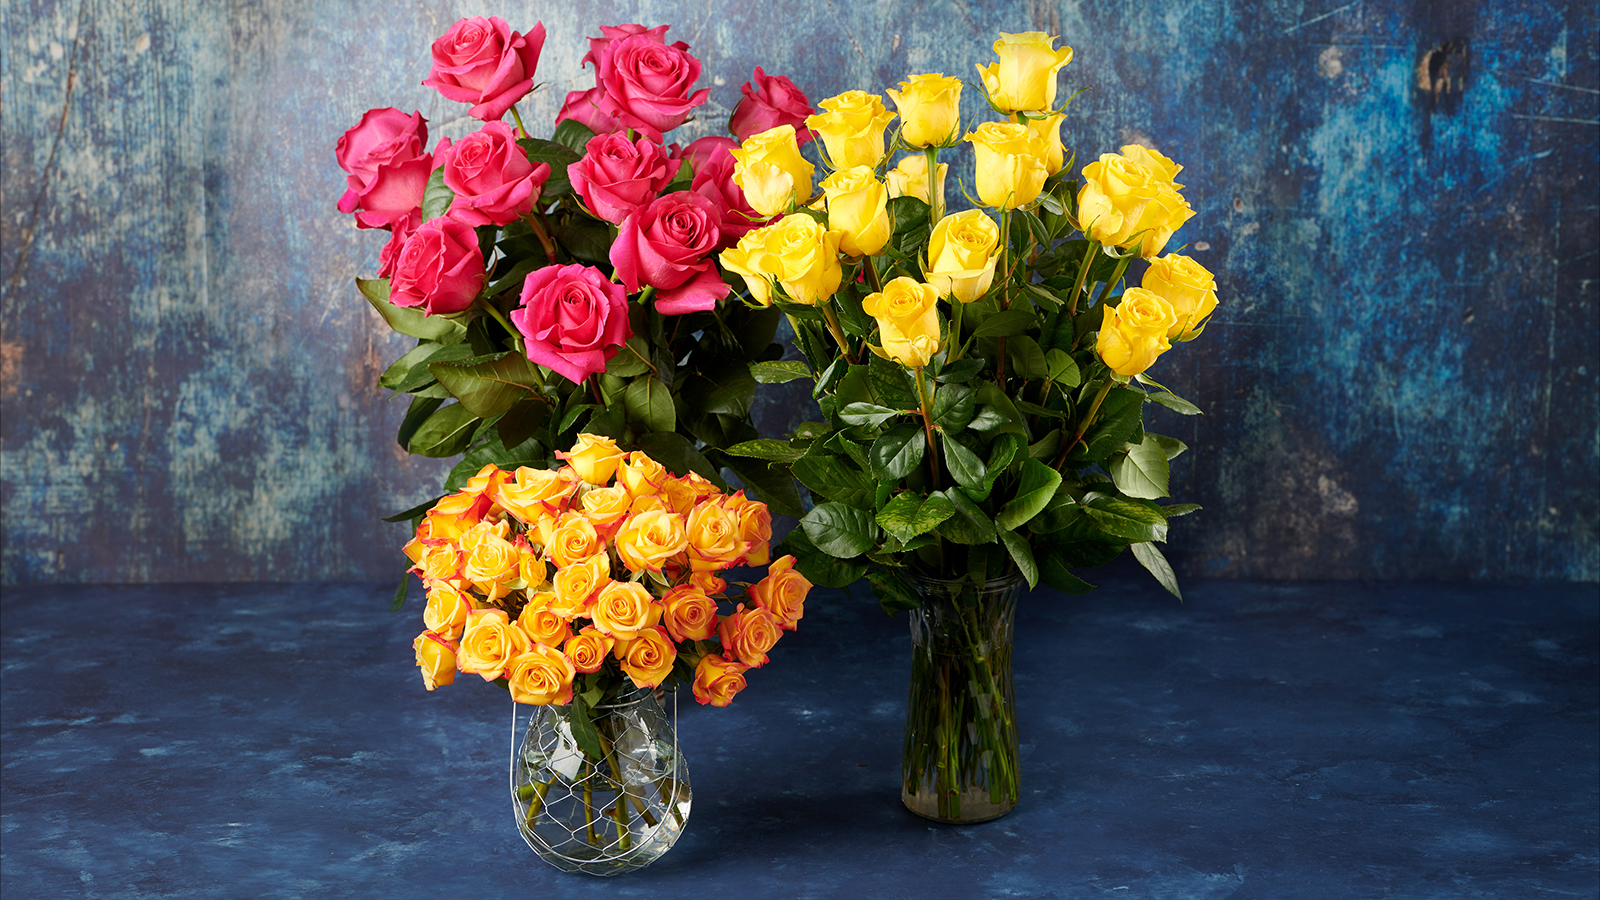 Mixed Colored Rose Special in Vase in Orange, CA